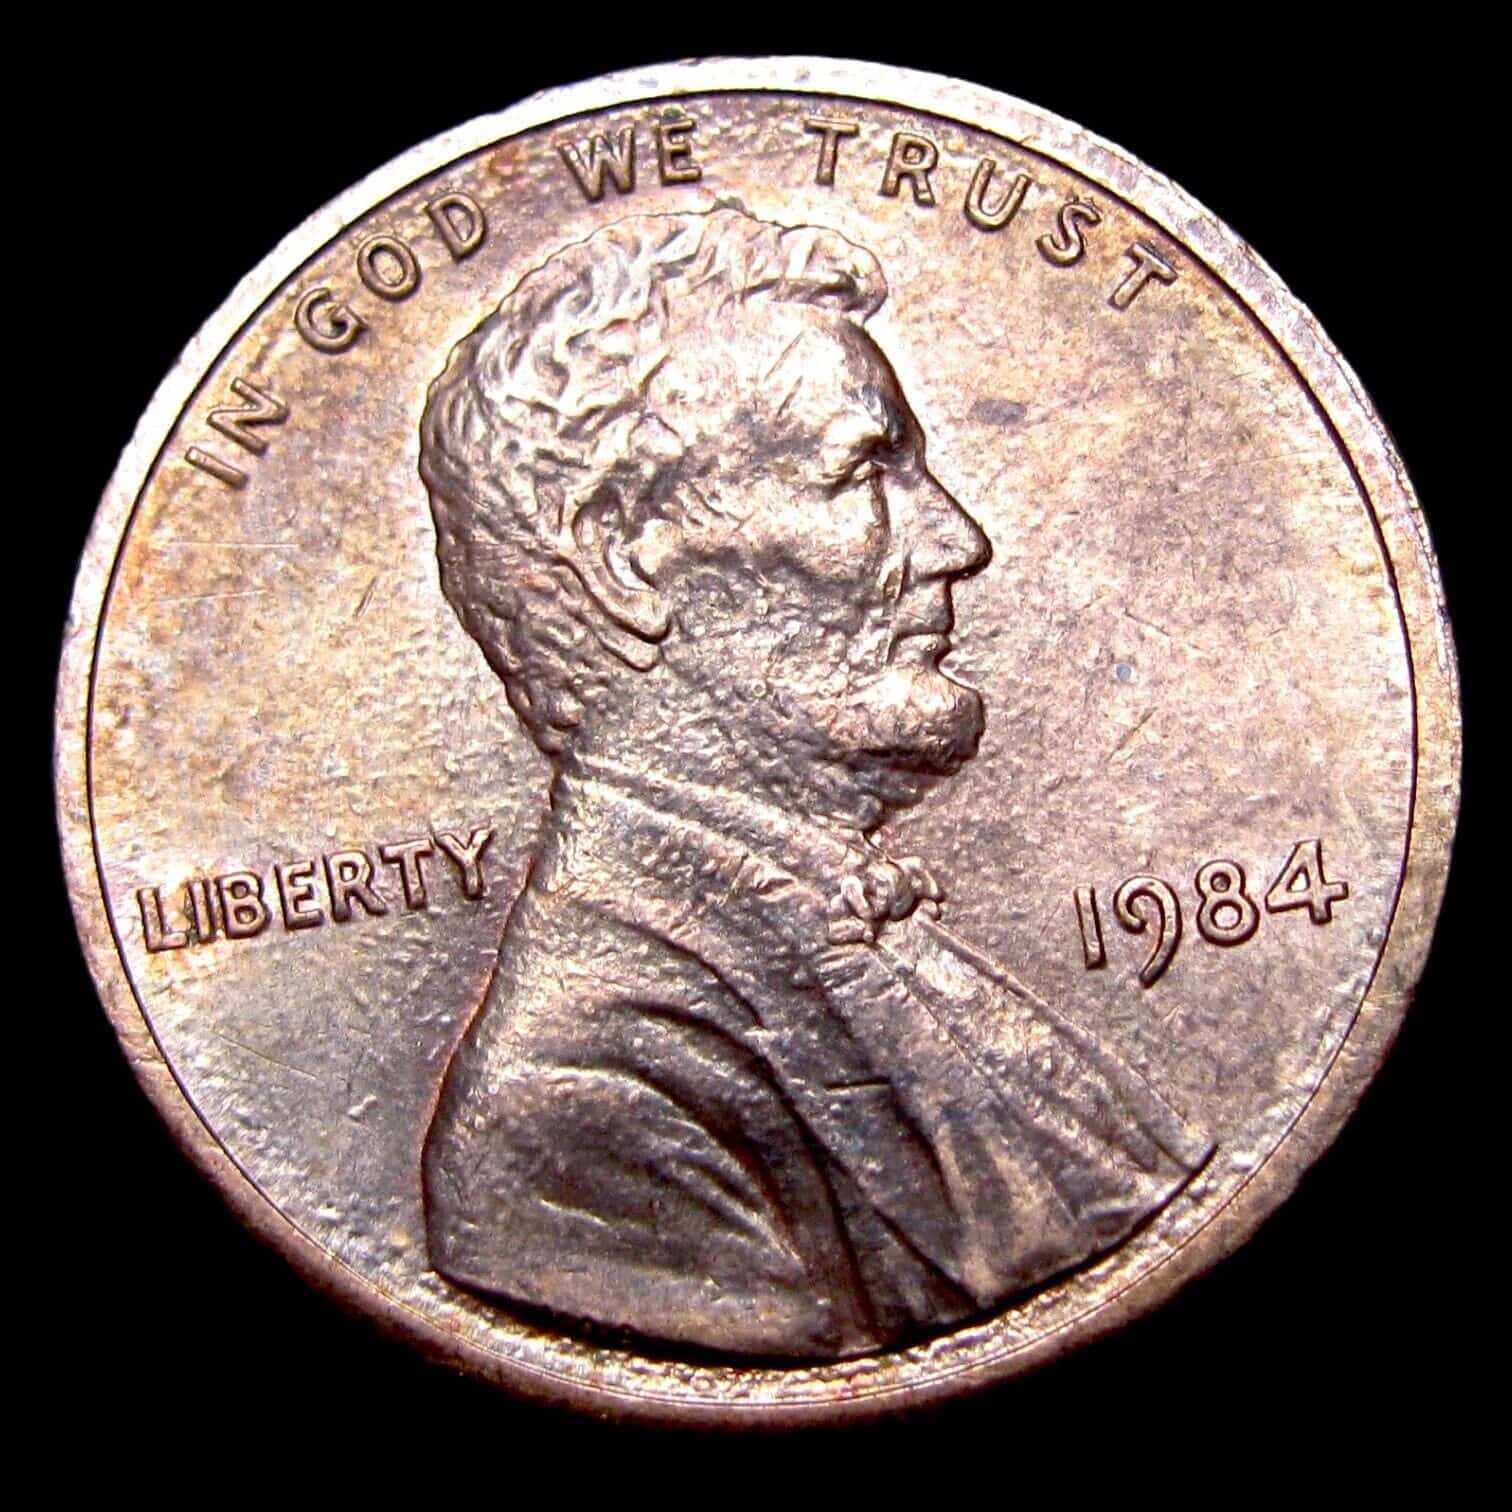 1982 Penny Value Double Die Obverse “Double Ear” Error